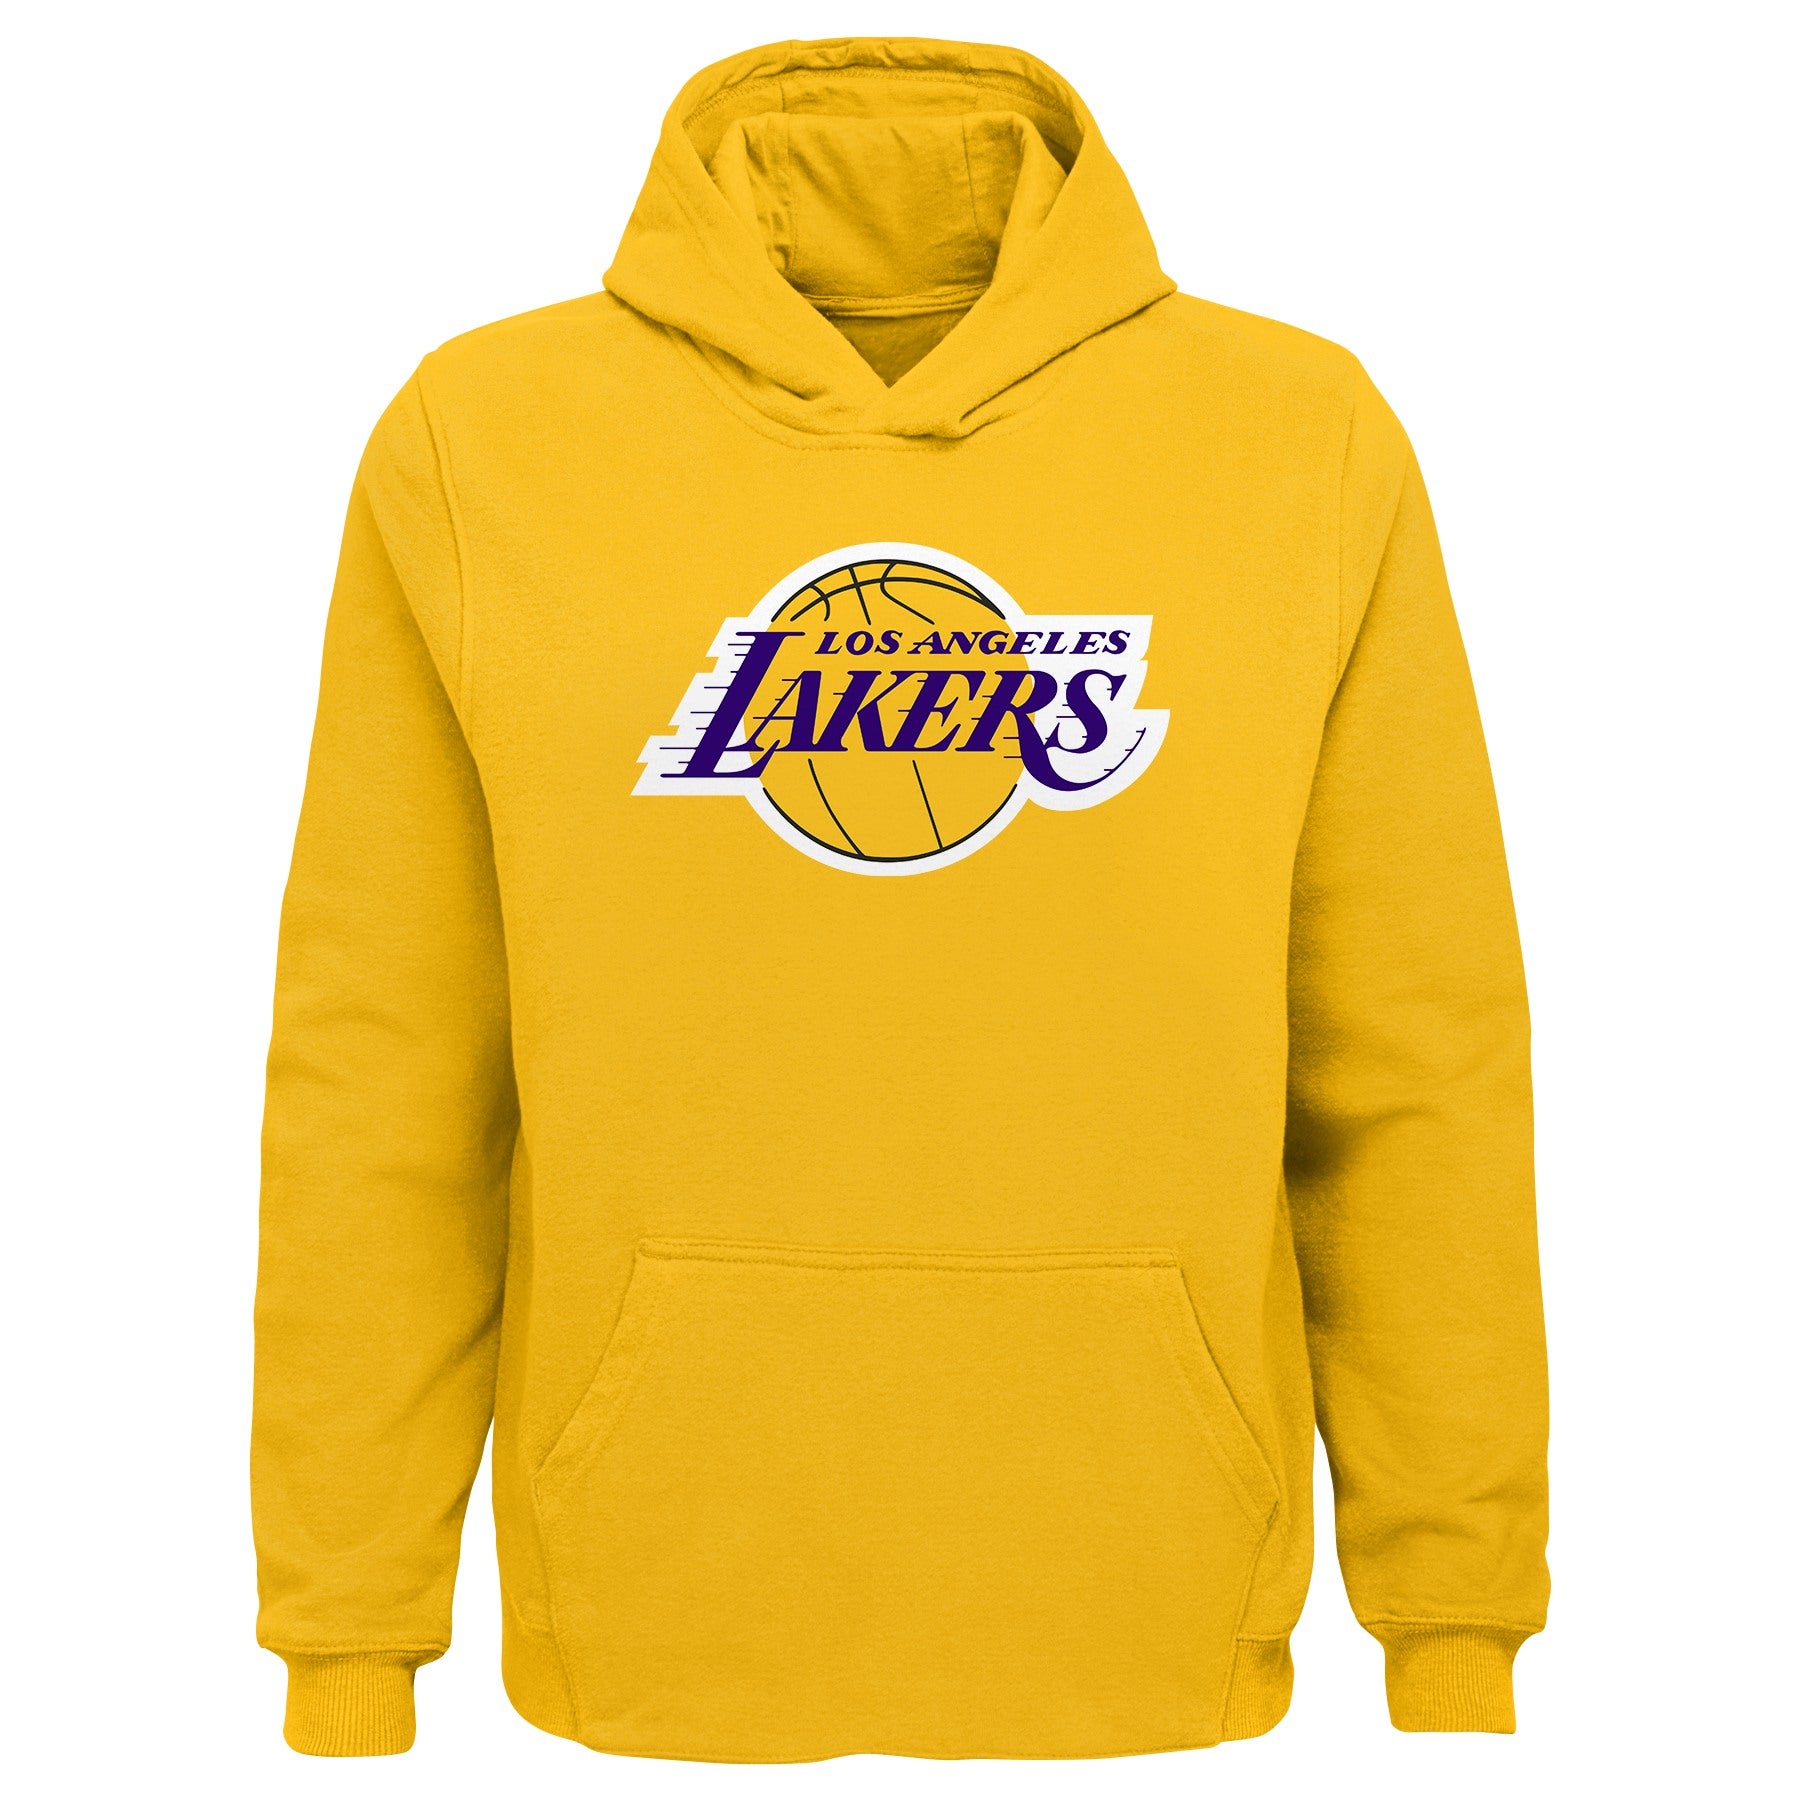 Outerstuff NBA Youth 8-20 Team Color Primary Logo Pullover Fleece Sweatshirt Hoodie